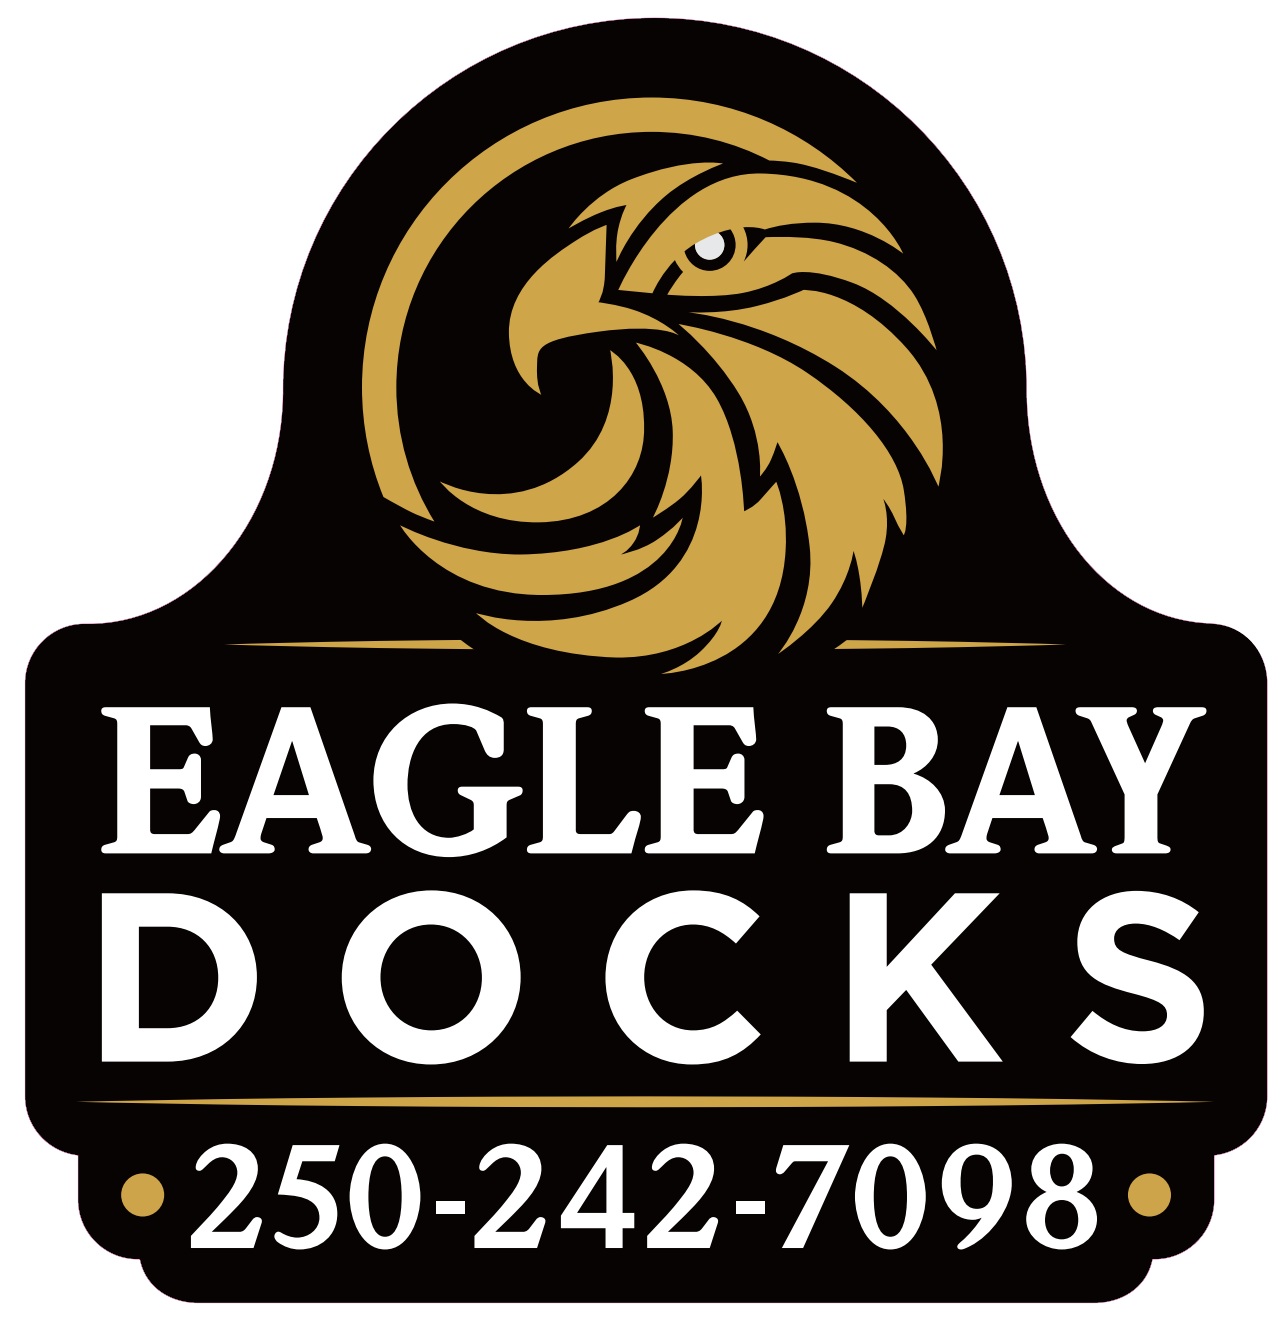 Eagle Bay Docks